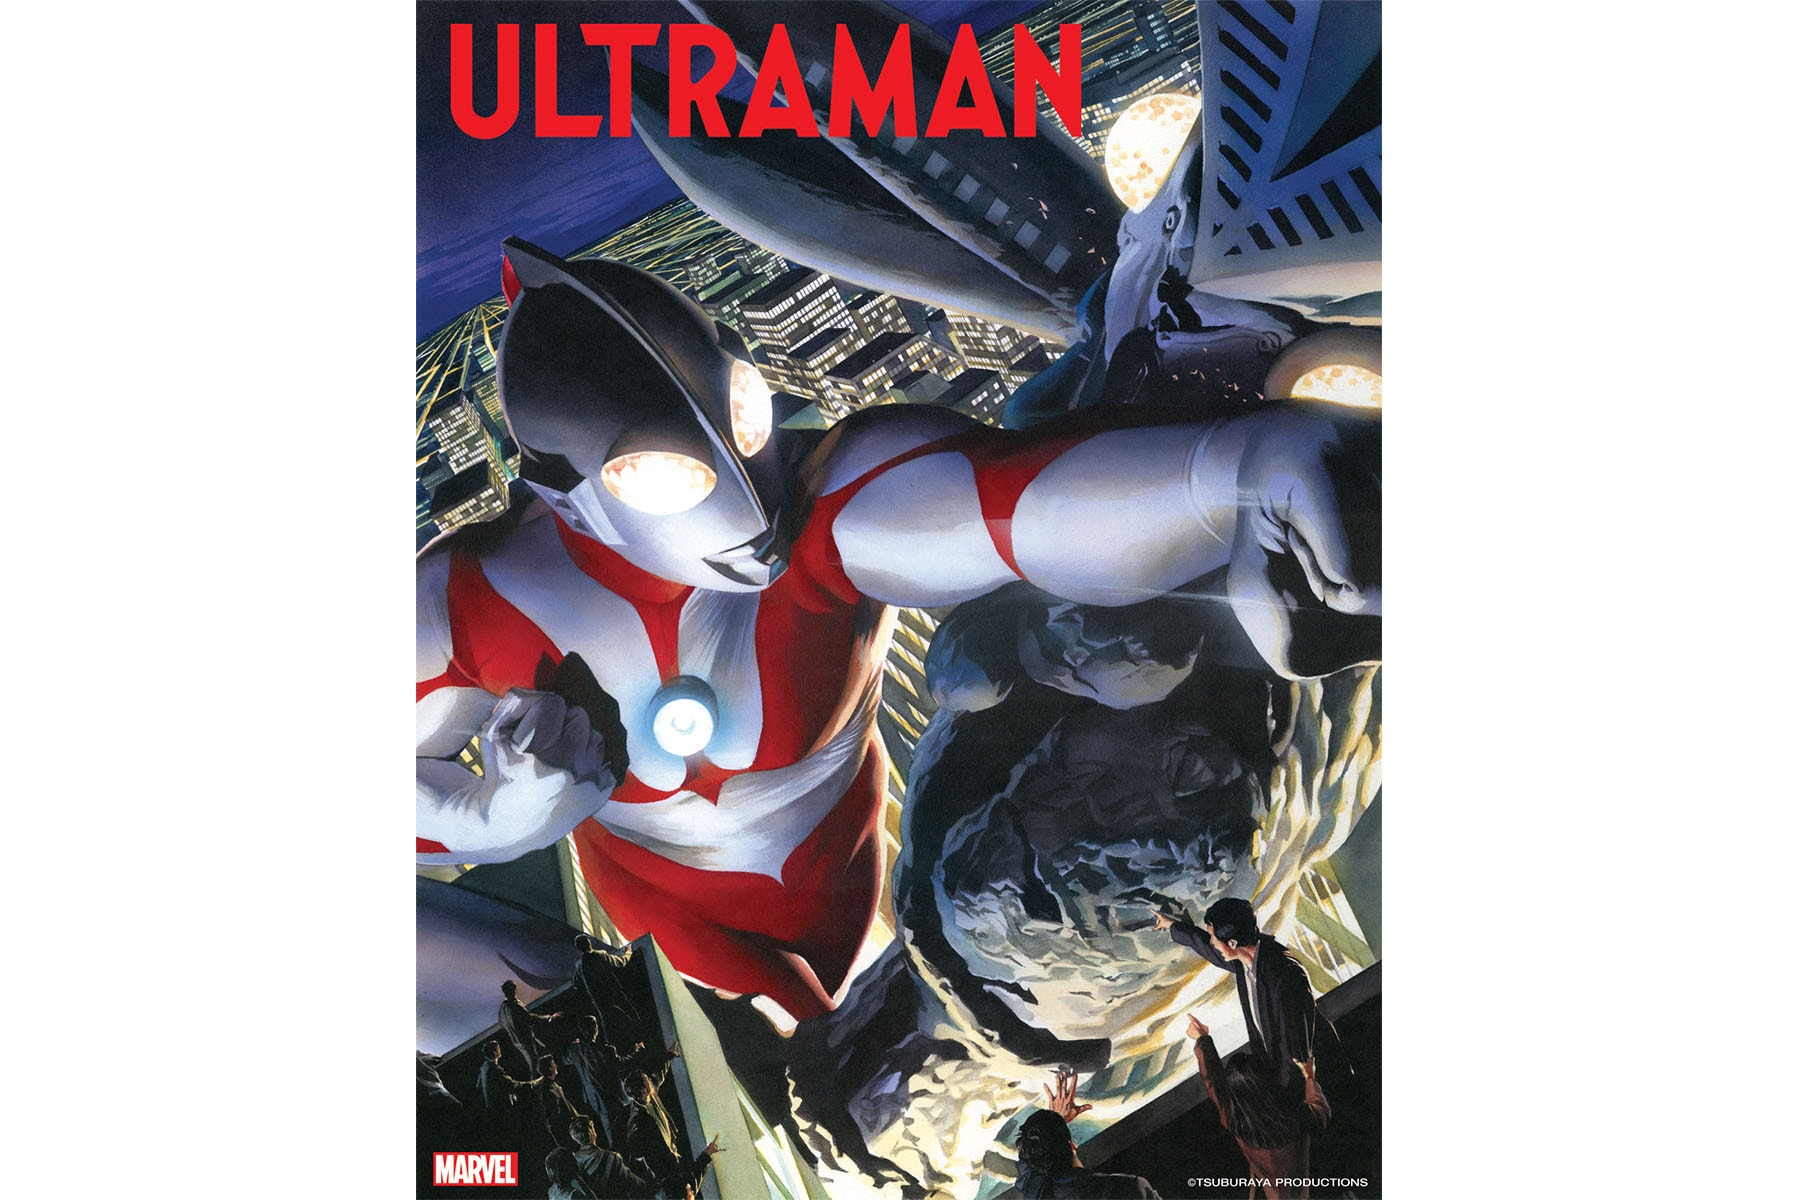 marvel ultraman Tsuburaya Productions comic books graphic novels art illustration multiverse japan superhero 